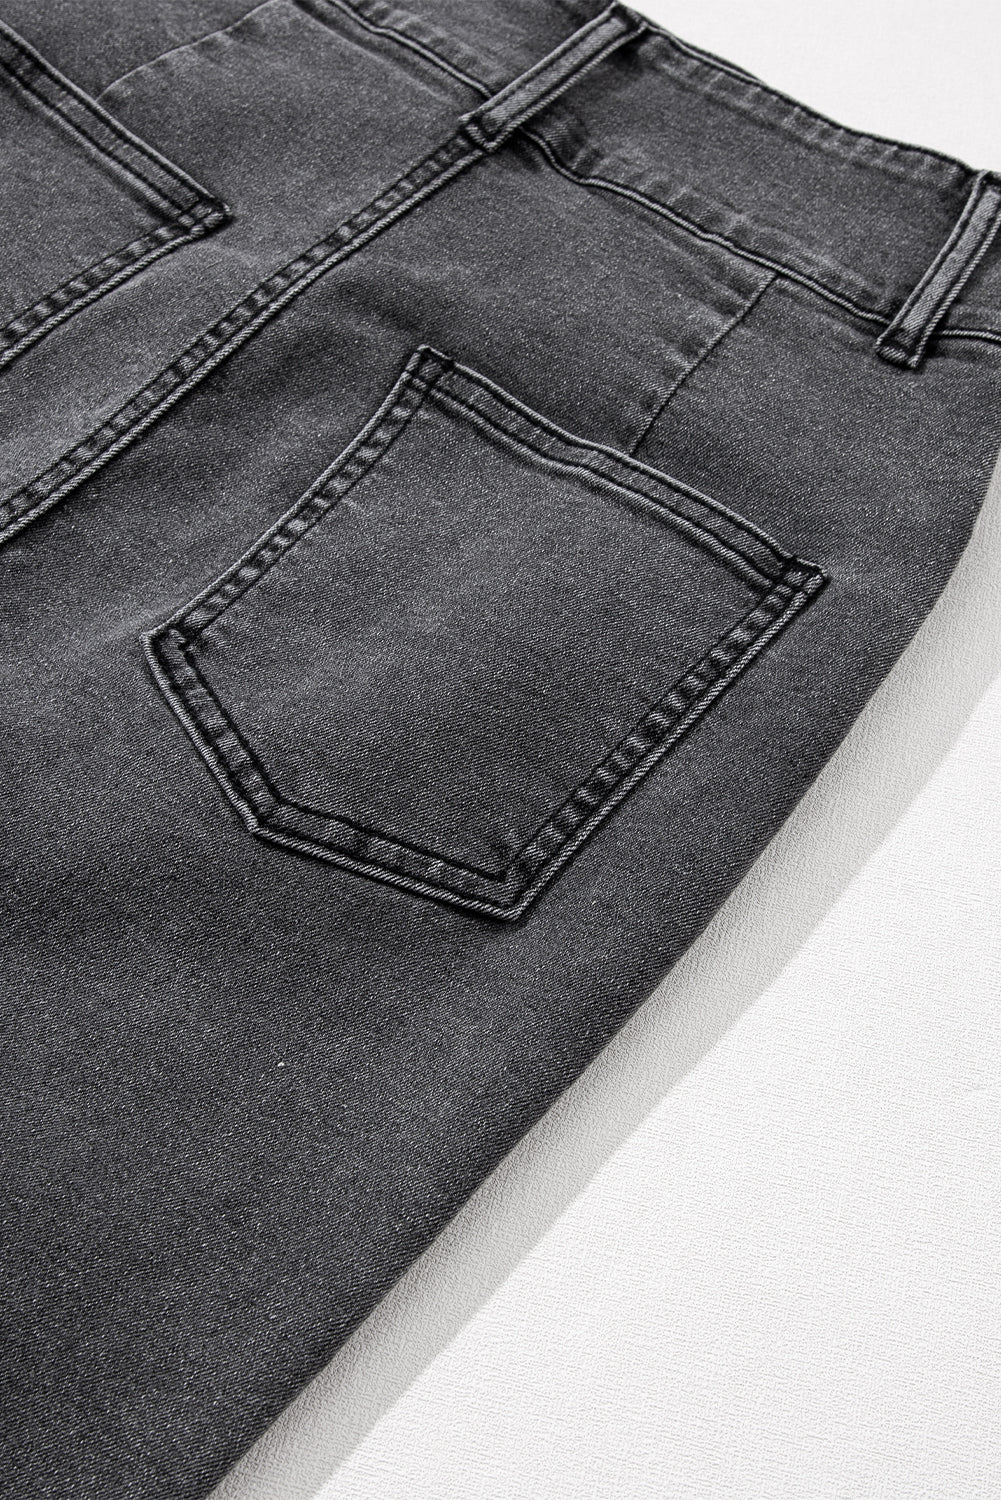 Black Raw Edge Side Slits Buttoned Midi Denim Skirt - SELFTRITSS